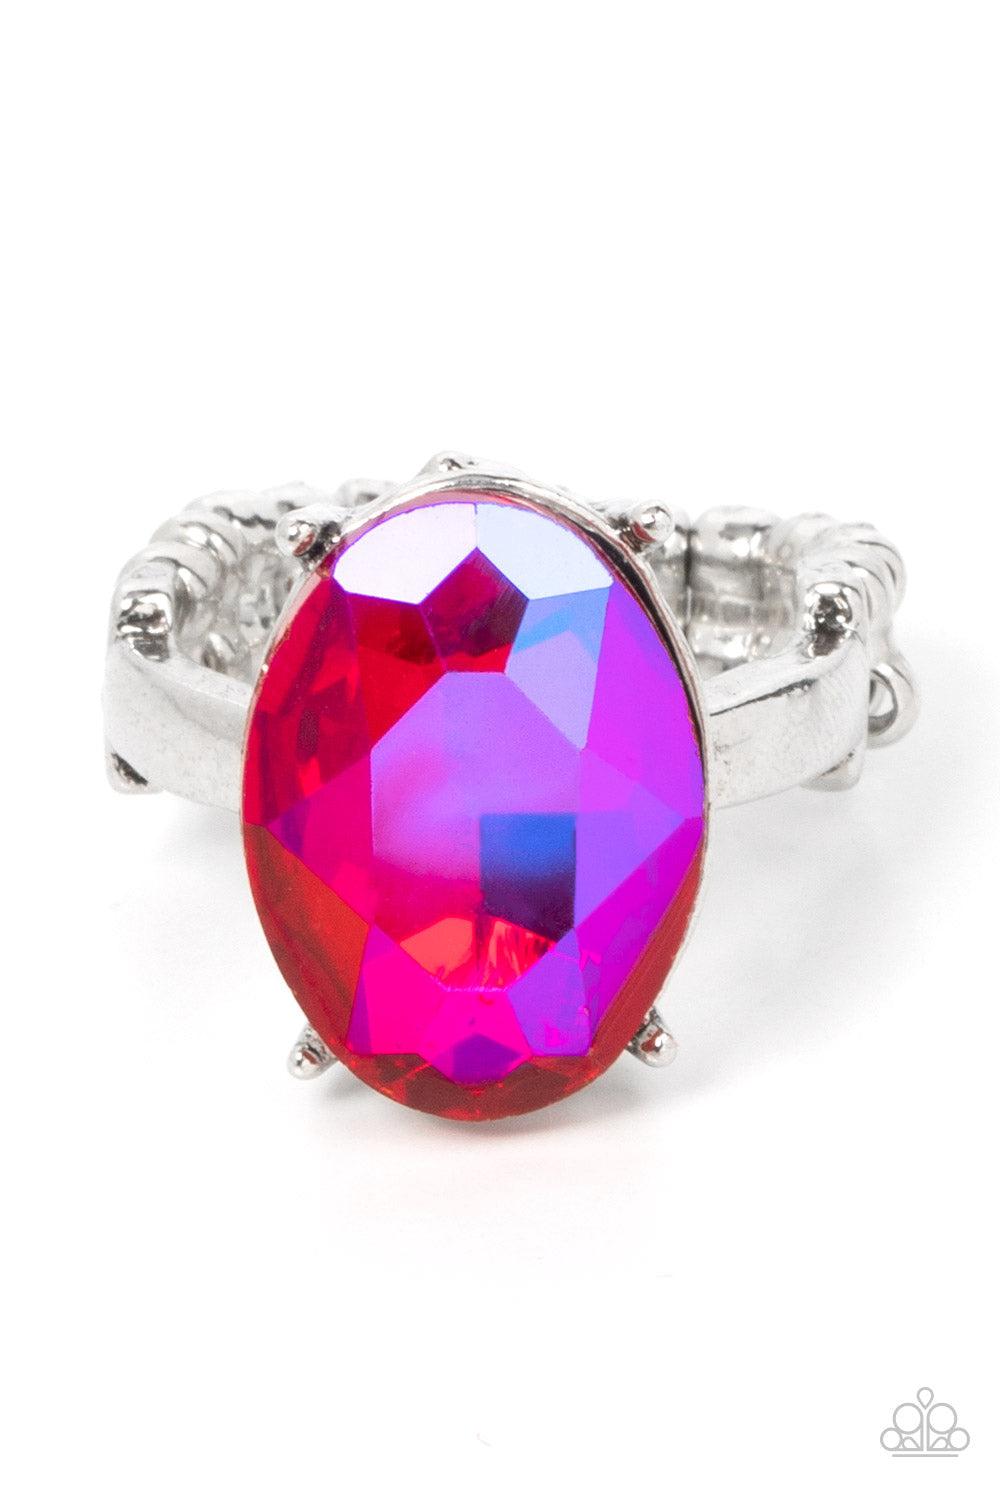 Updated Dazzle Pink Iridescent Rhinestone Ring - Paparazzi Accessories- lightbox - CarasShop.com - $5 Jewelry by Cara Jewels